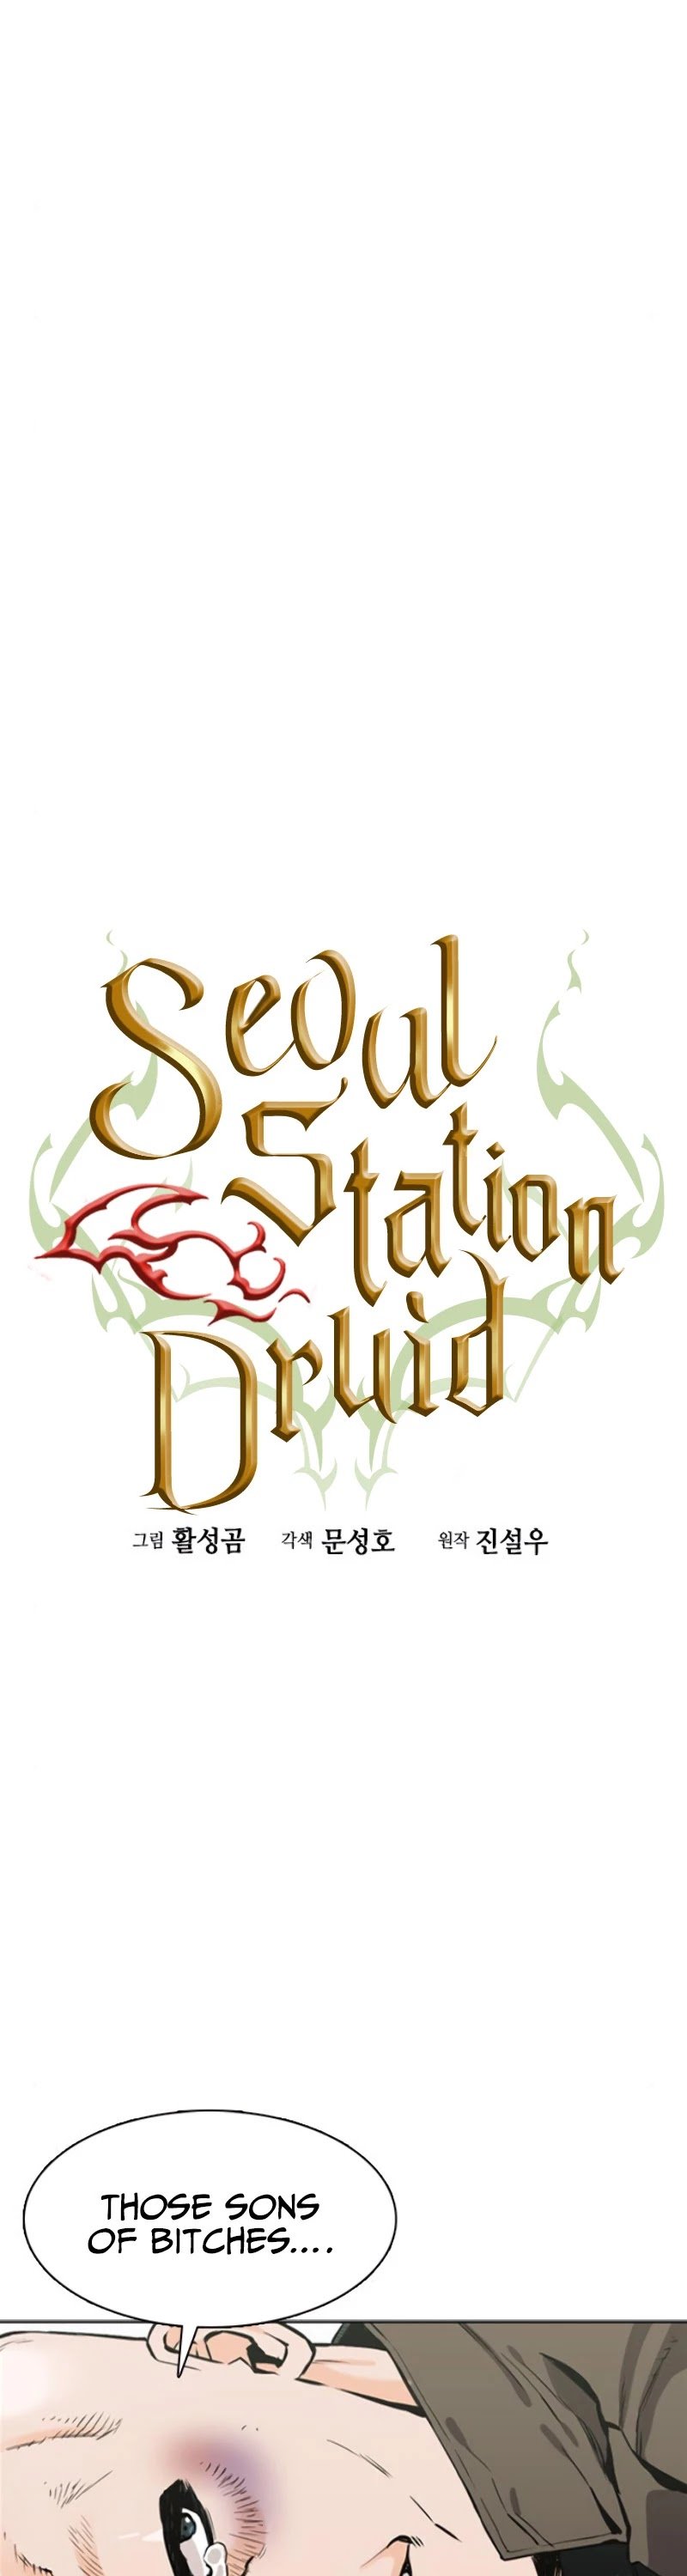 Seoul Station Druid chapter 10